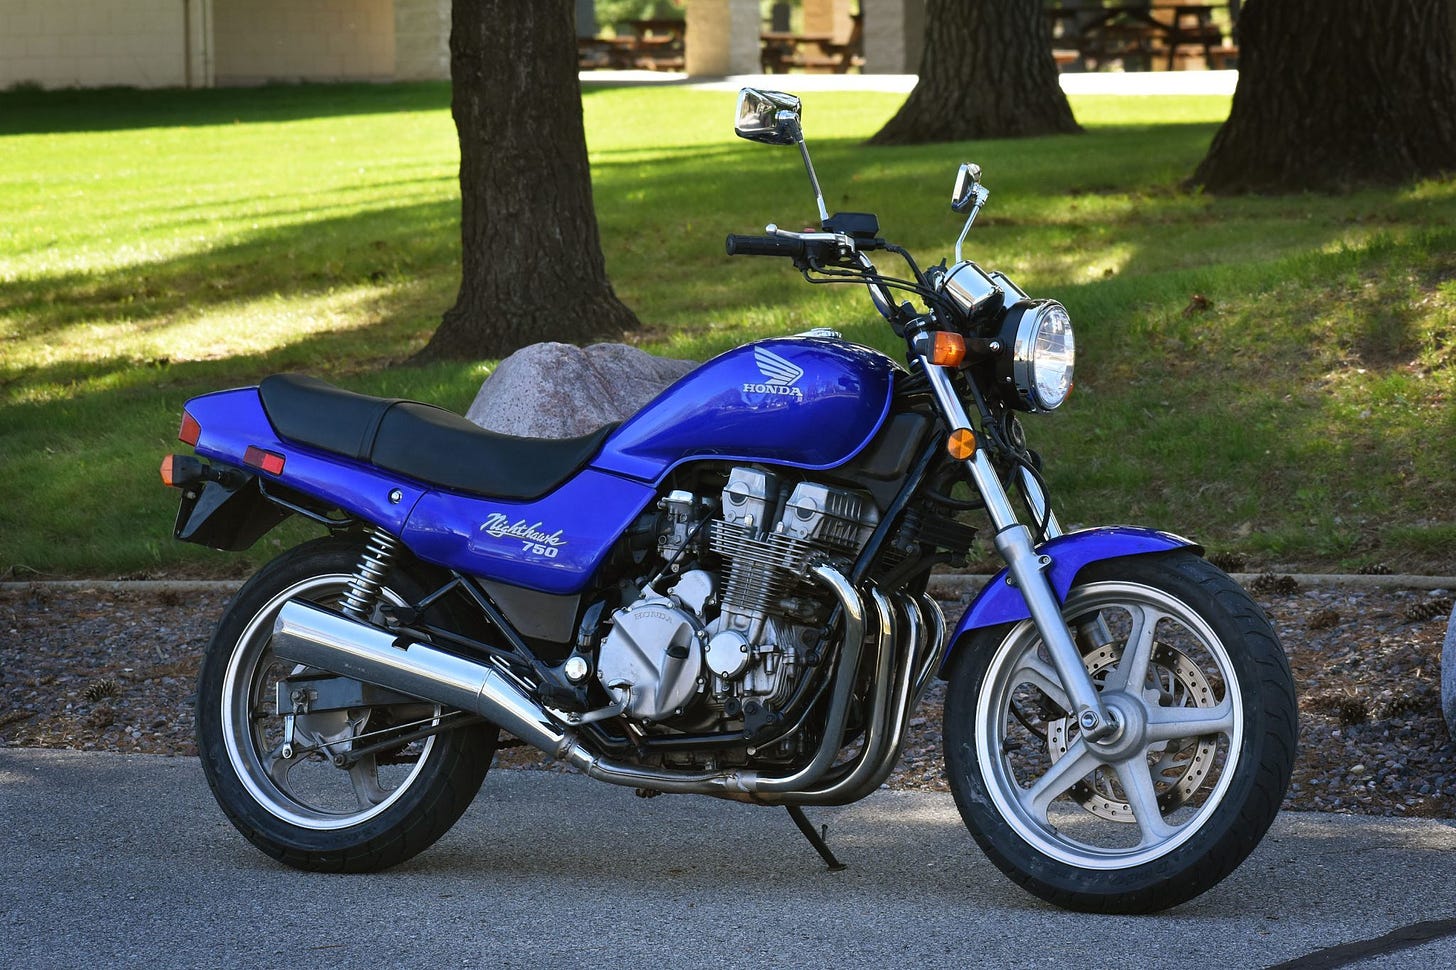 1993 Honda CB750 Nighthawk Looks Handsome Wearing Blue Paint and Modern  Rubber - autoevolution